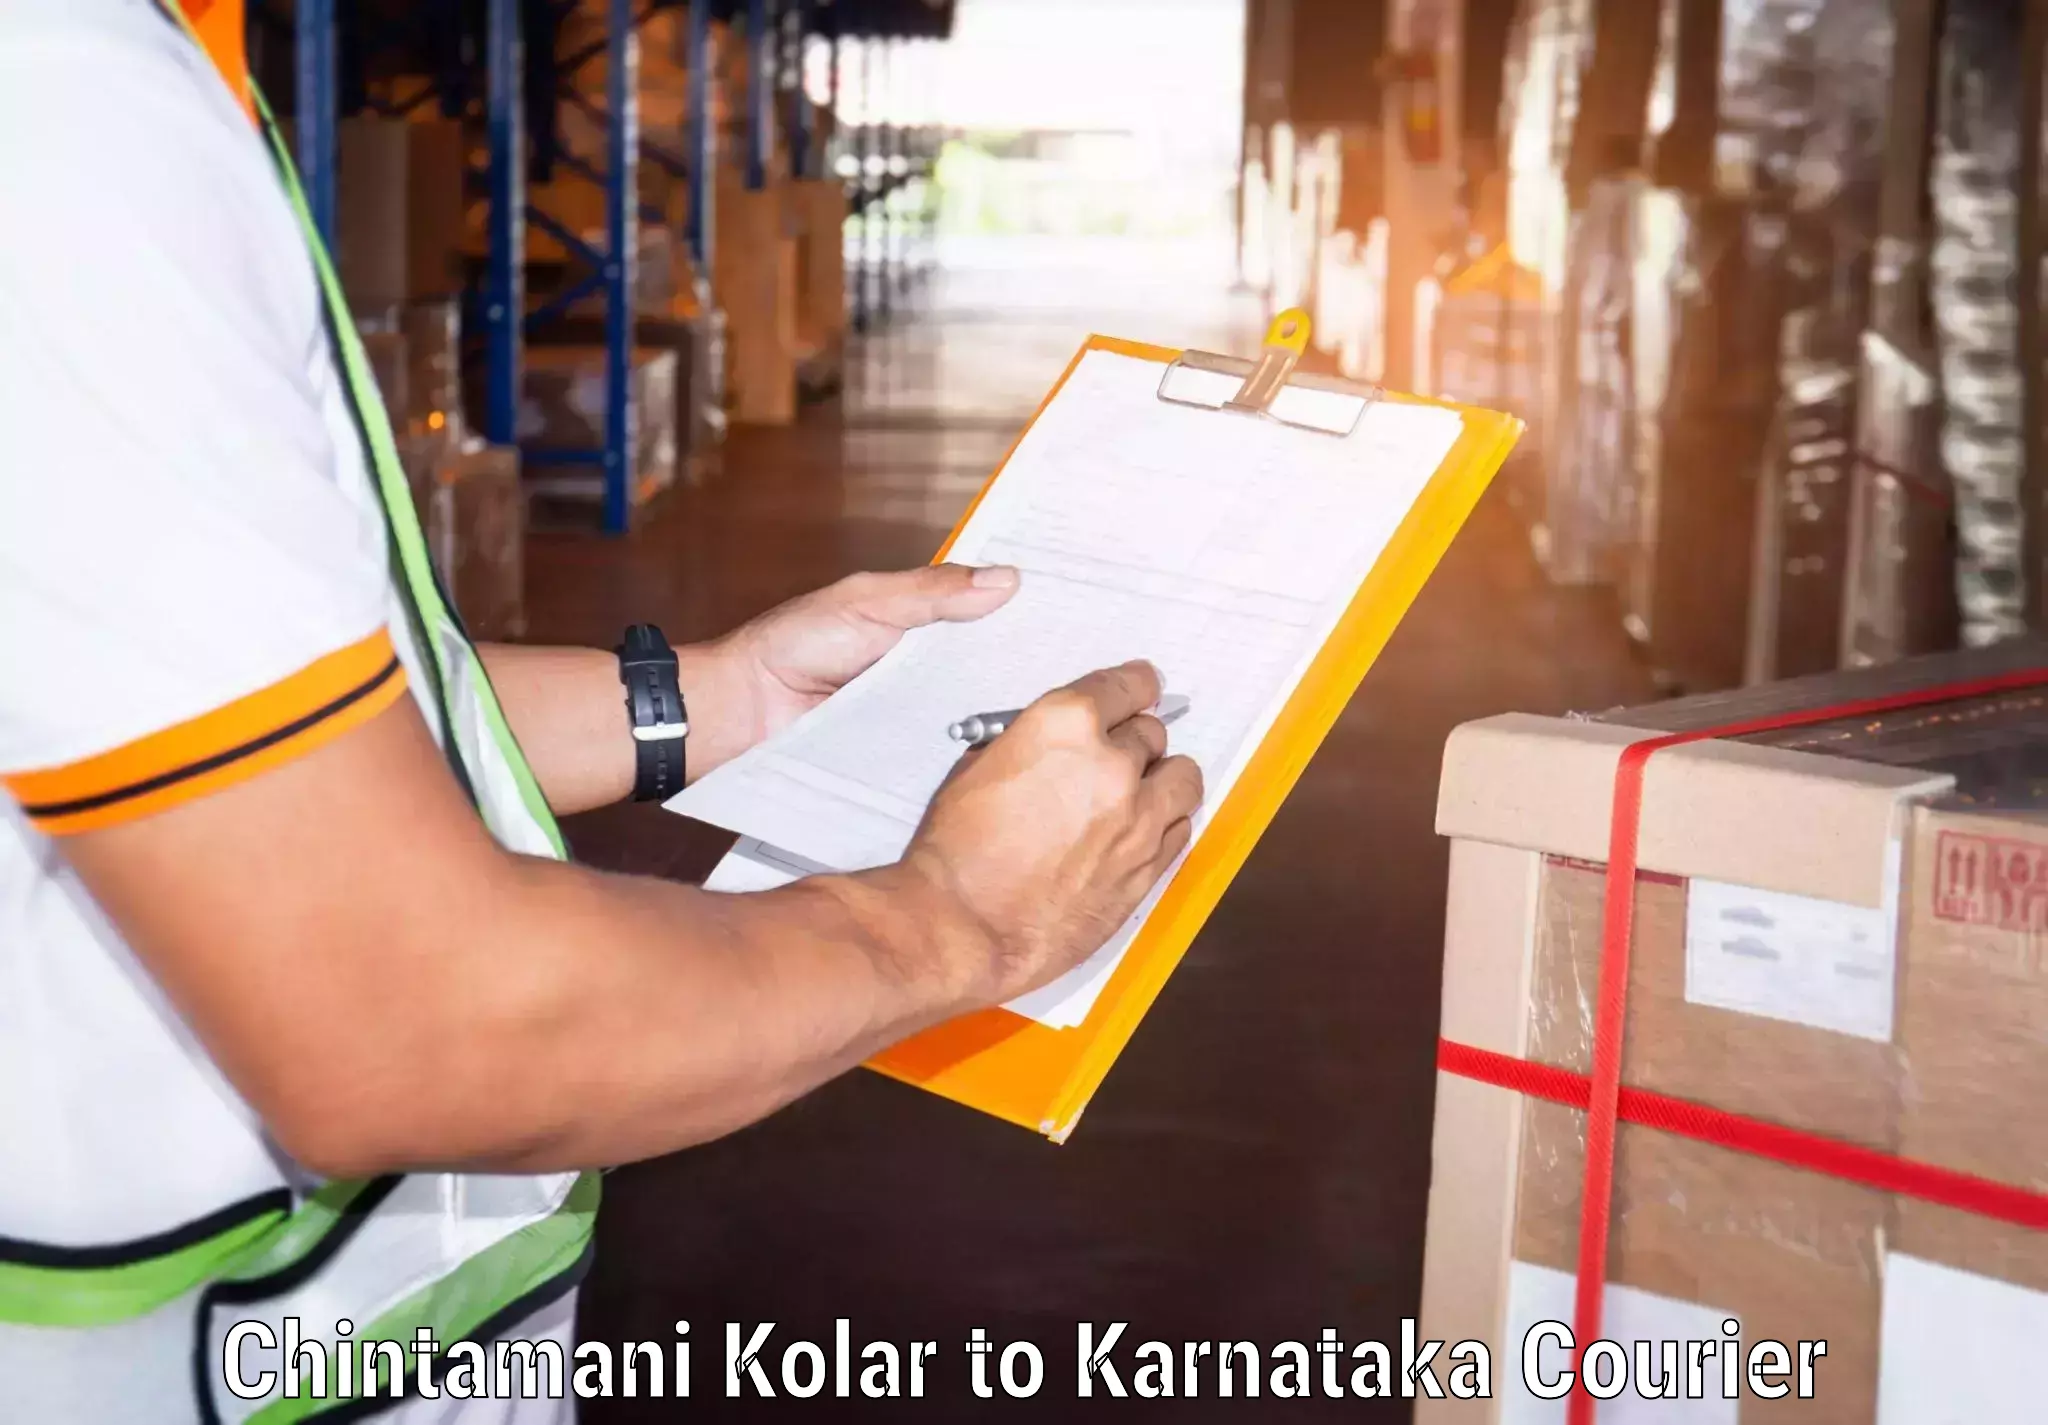 Next-day delivery options in Chintamani Kolar to Hagaribommanahalli